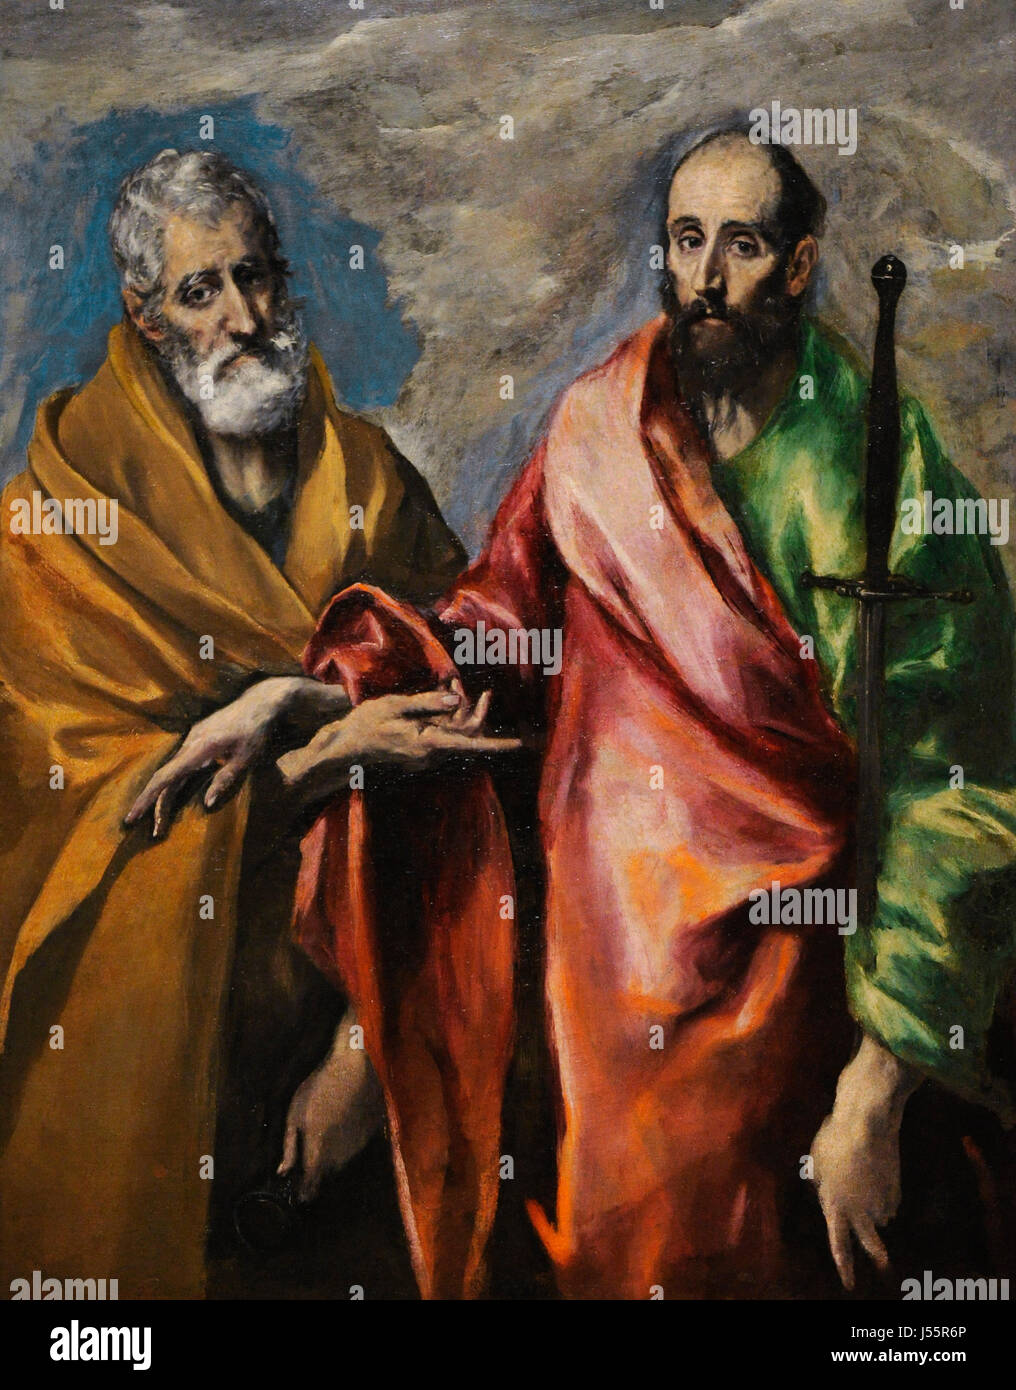 El Greco (1541-1614). Cretan painter. Saint Peter and Saint Paul, 1590-1600. National Art Museum of Catalonia. Barcelona. Catalonia. Spain. Stock Photo